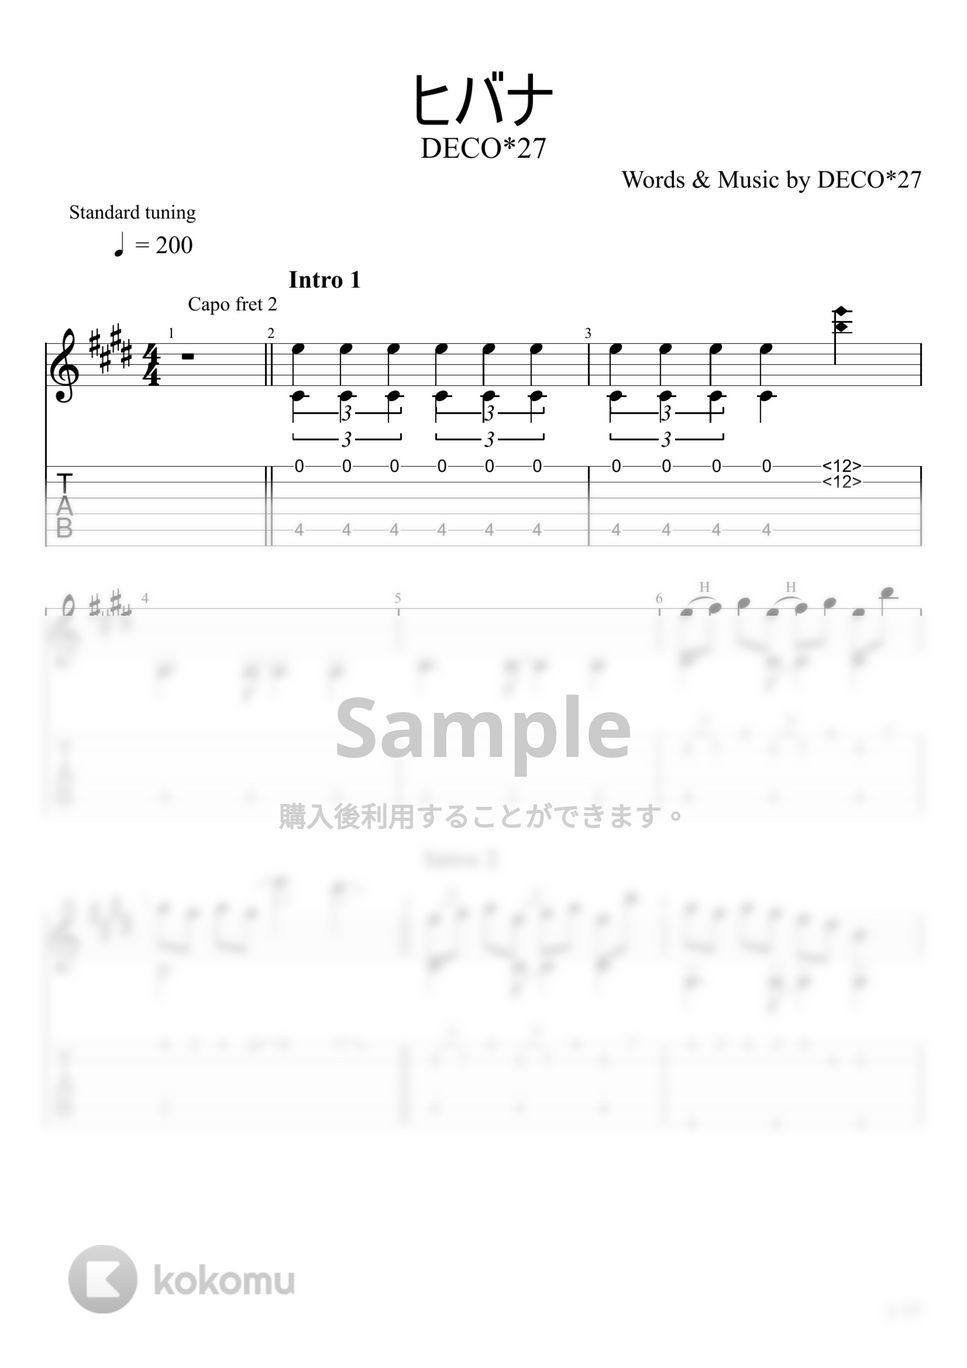 DECO*27 - ヒバナ (ソロギター) by u3danchou